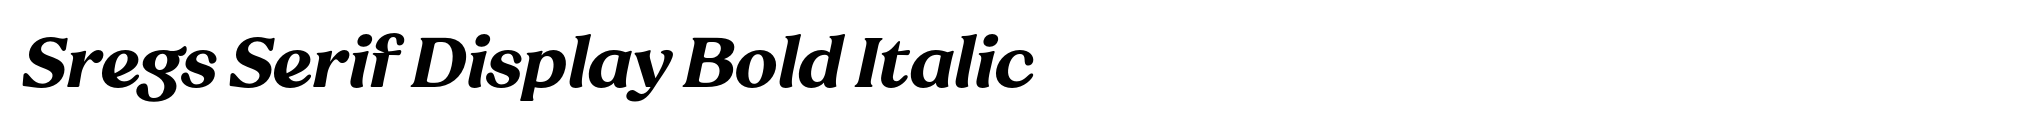 Sregs Serif Display Bold Italic image